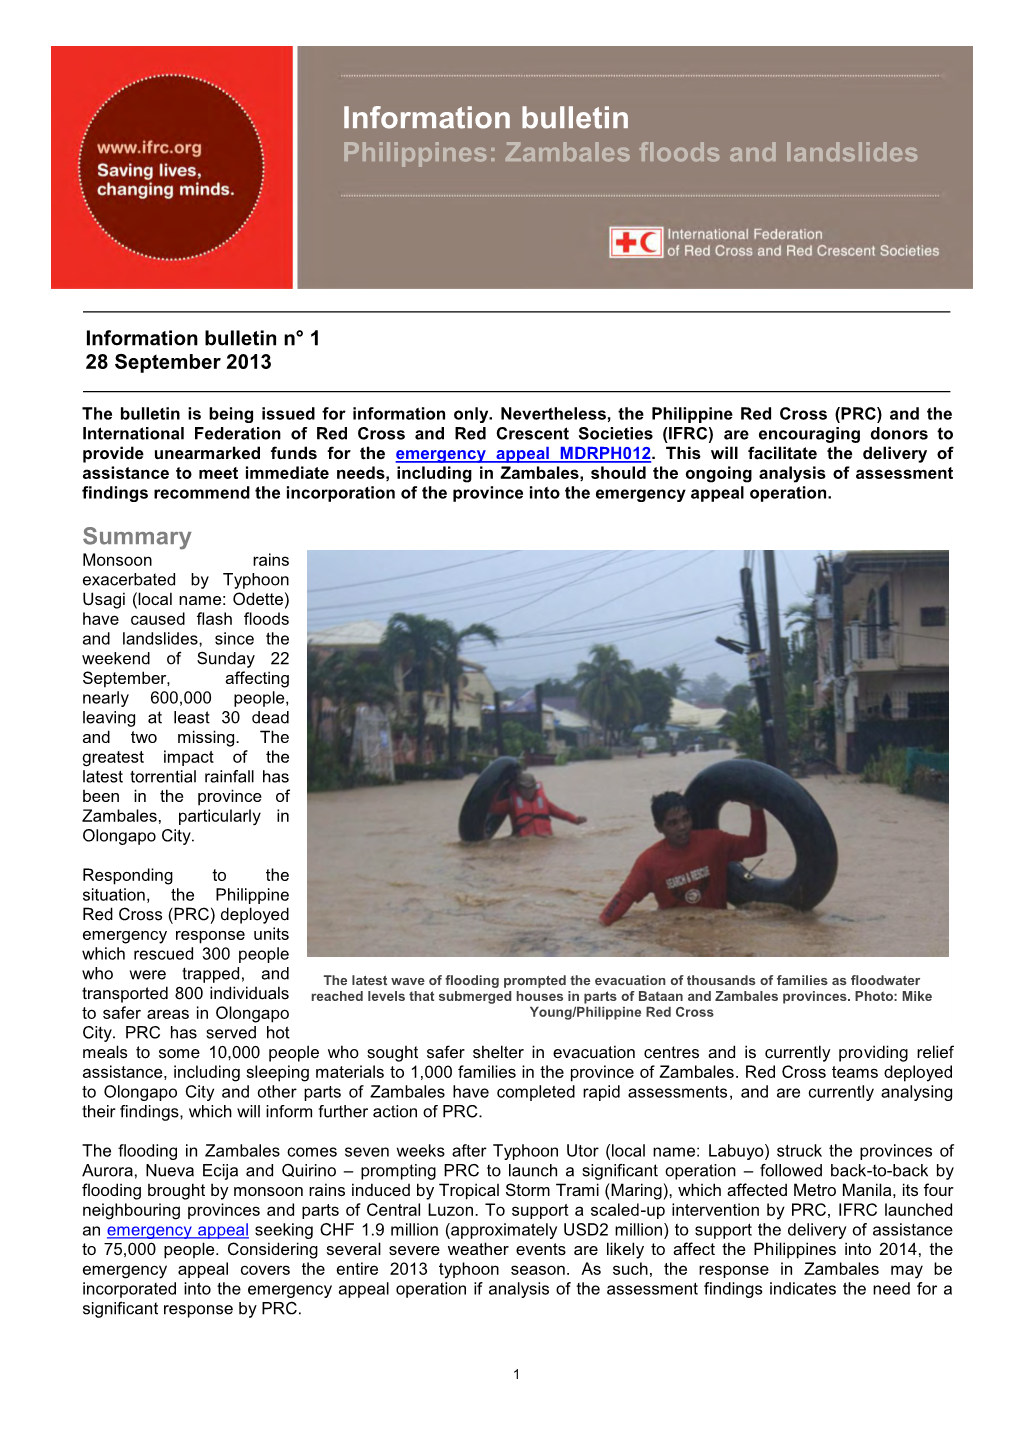 Information Bulletin Philippines: Zambales Floods and Landslides